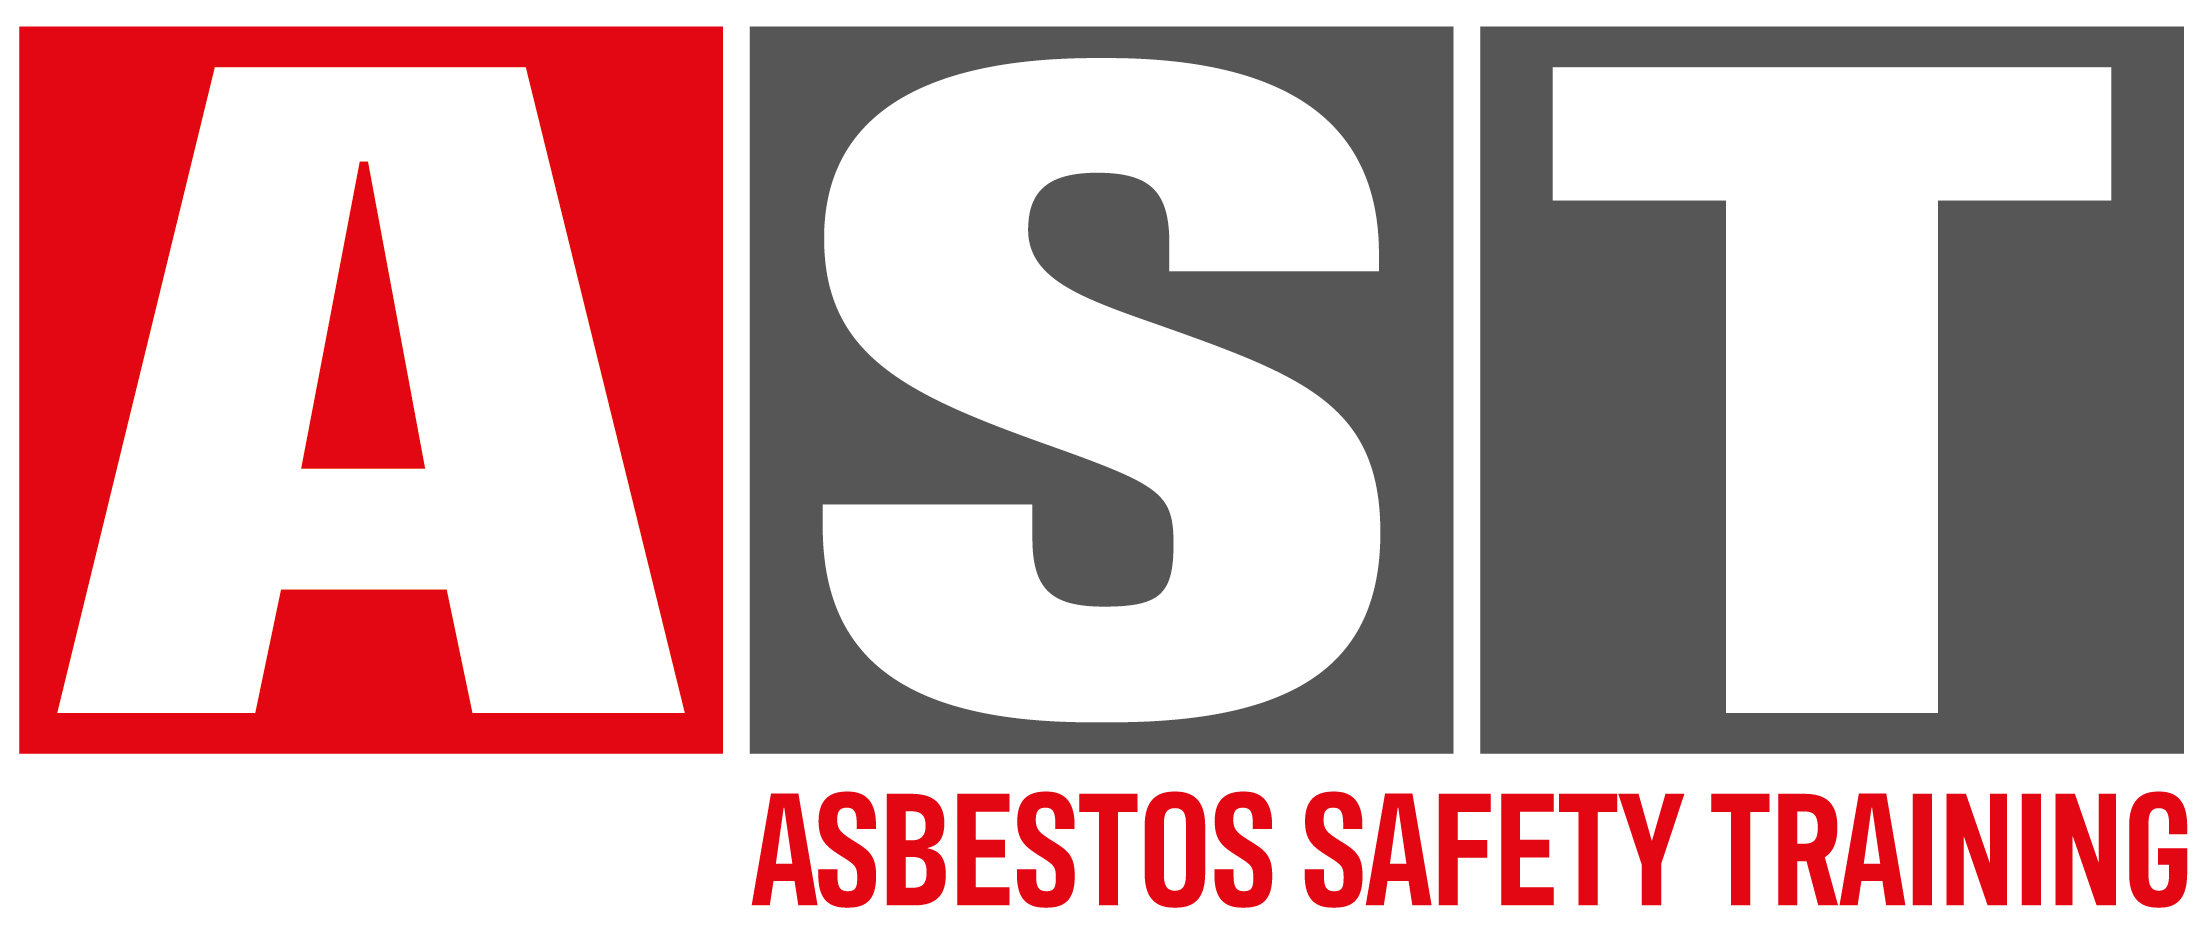 Asbestos Safety Training Ltd logo